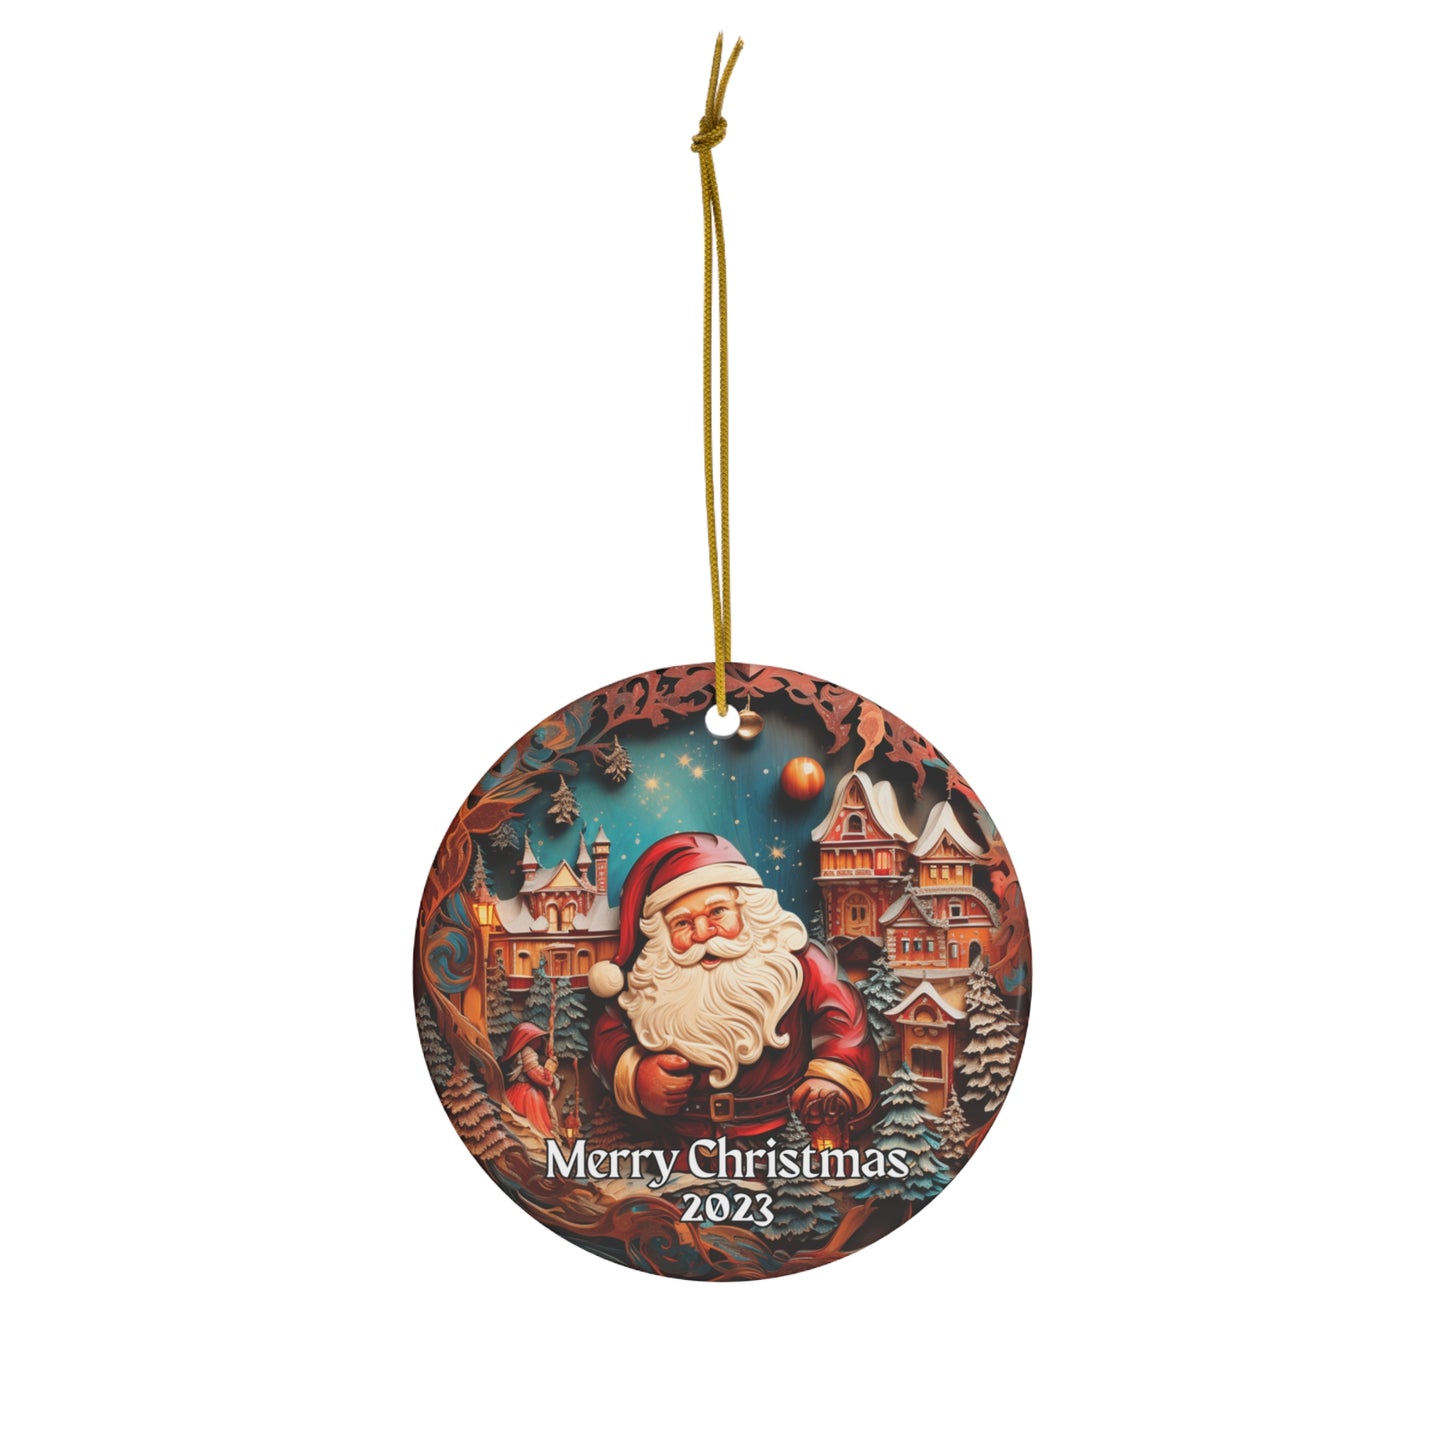 Santa 2023 Ornament, 2023 Christmas Decoration, Holiday Gift Idea, Heirloom Keepsake, Round Ceramic, Gift Exchange